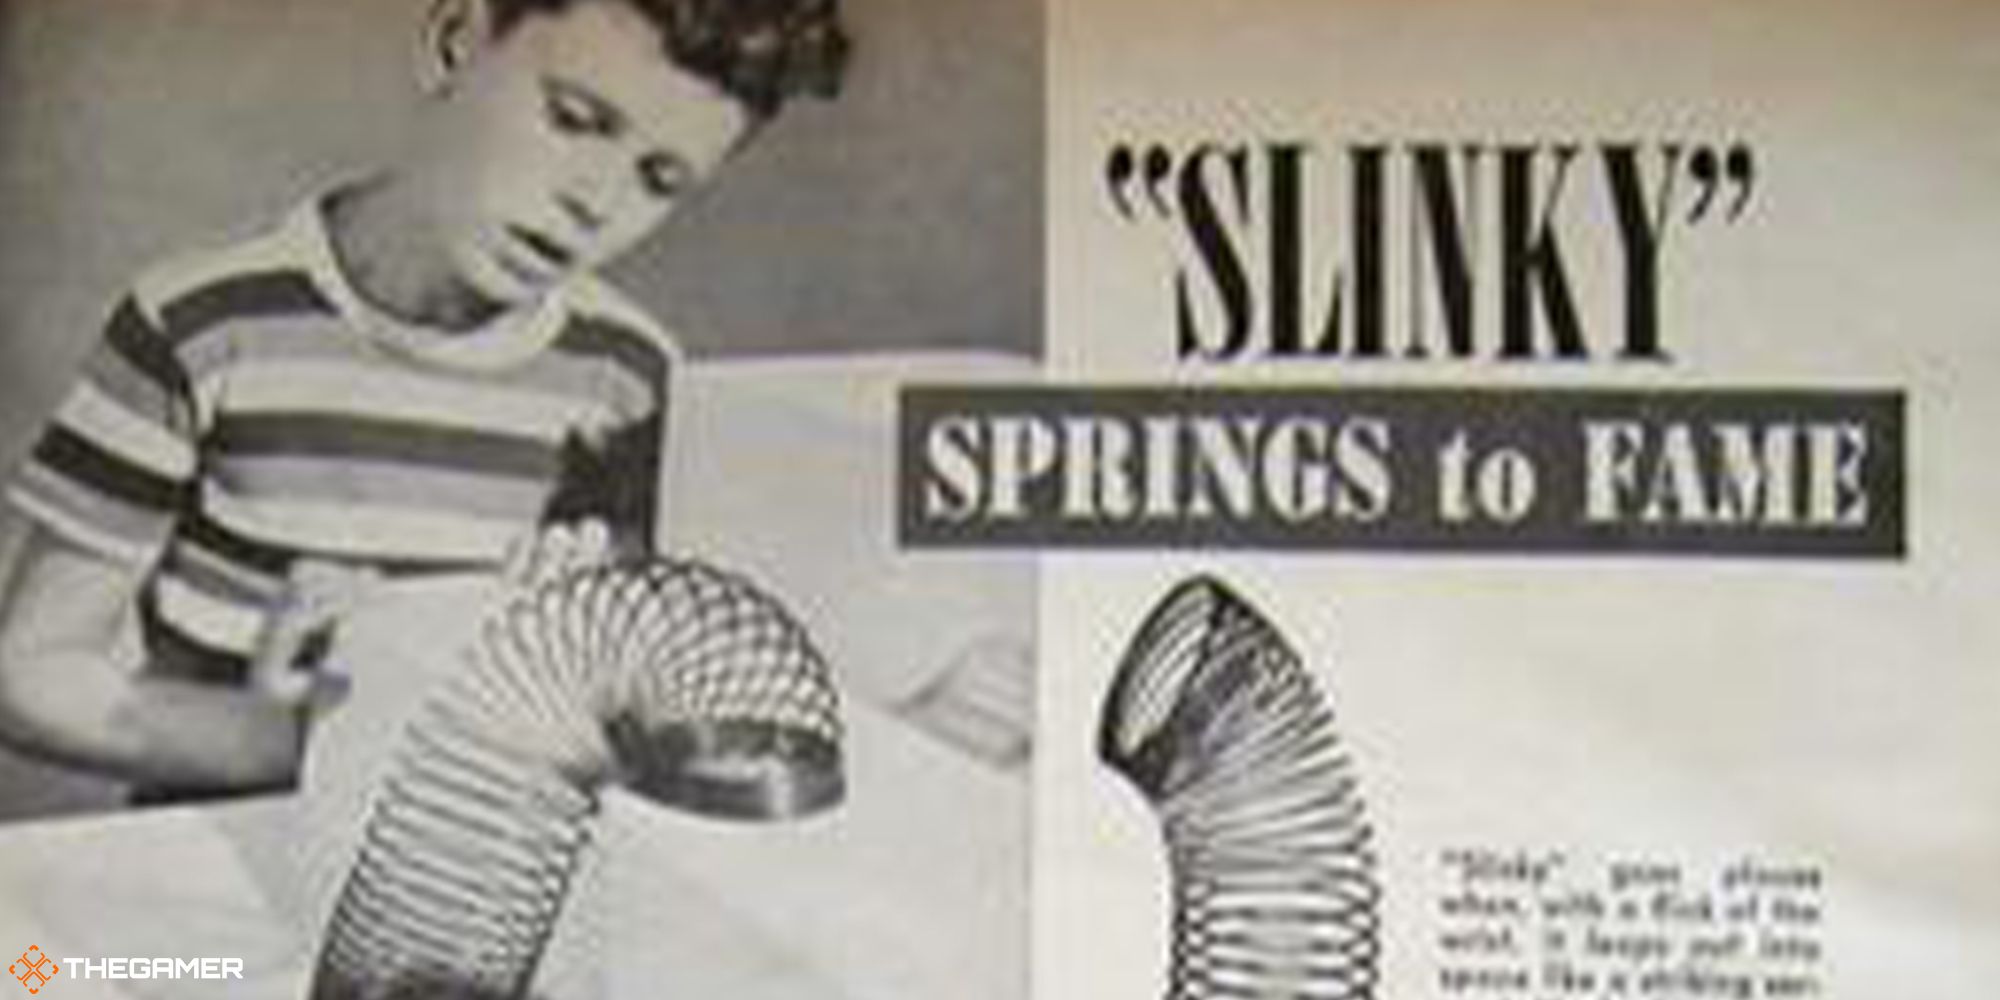 Slinky ad